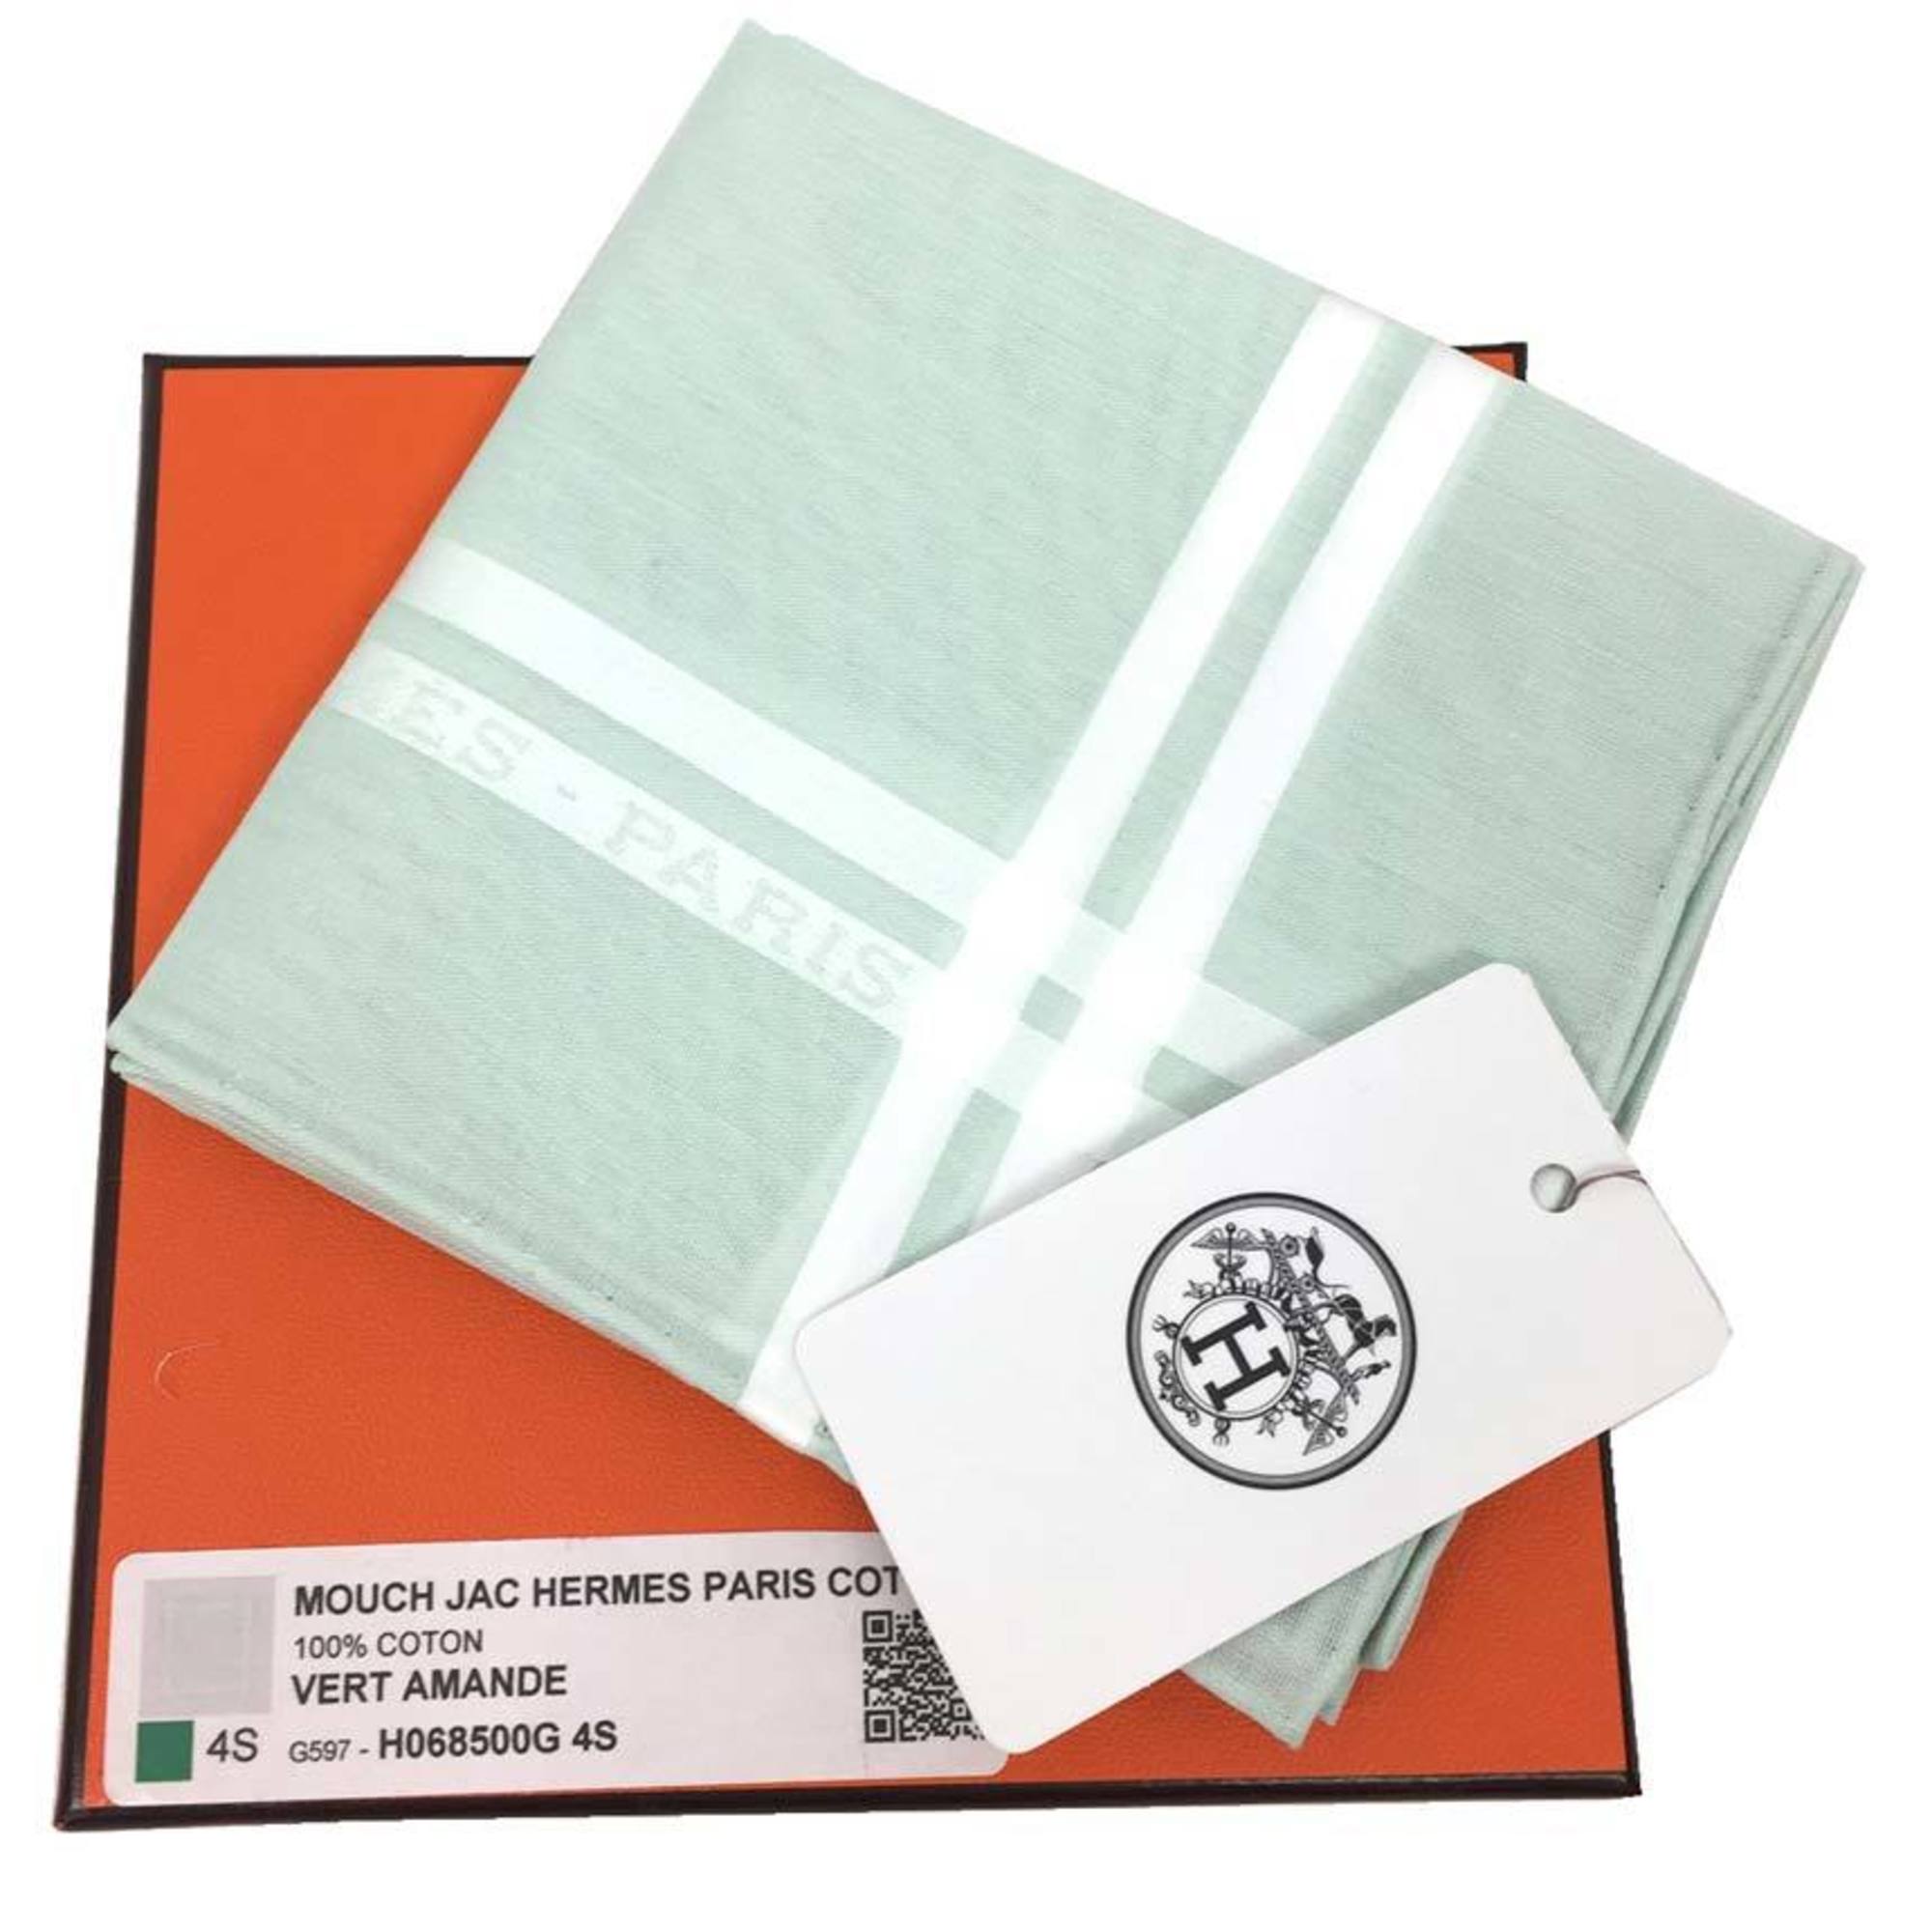 HERMES Handkerchief MOUCH JACHERMES PARIS H068500G 4S 100% Cotton VERT AMANDE Light Green Pocket Square Neckerchief Bandana aq10033